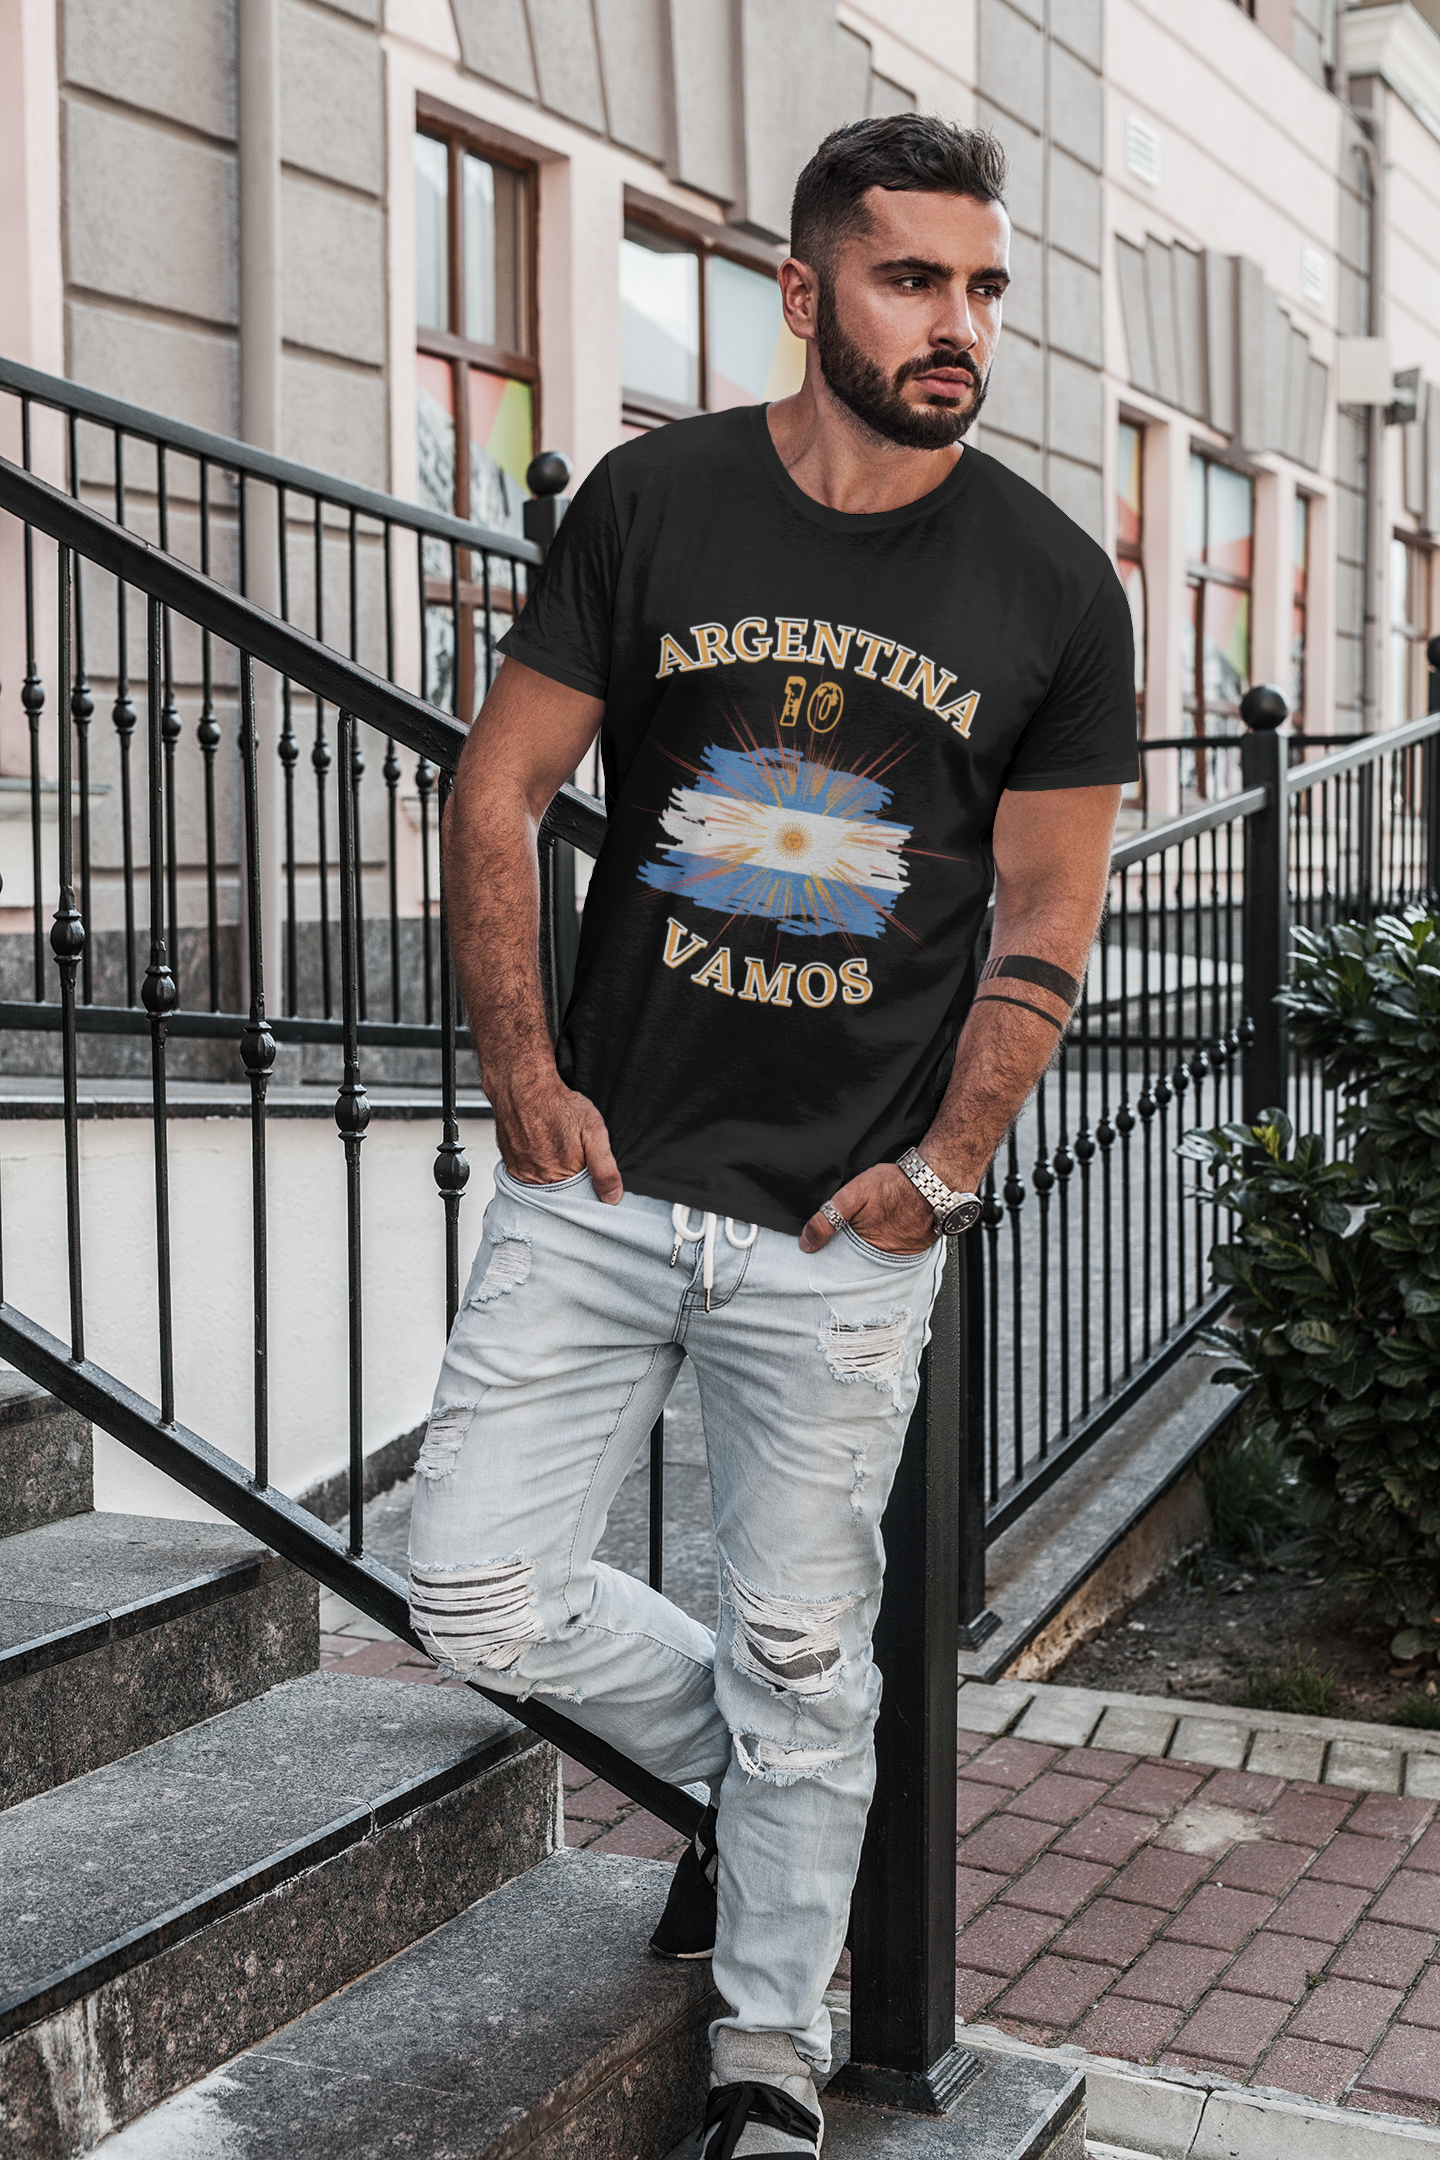 "ARGENTINA, VAMOS" Short-Sleeve Unisex T-Shirt